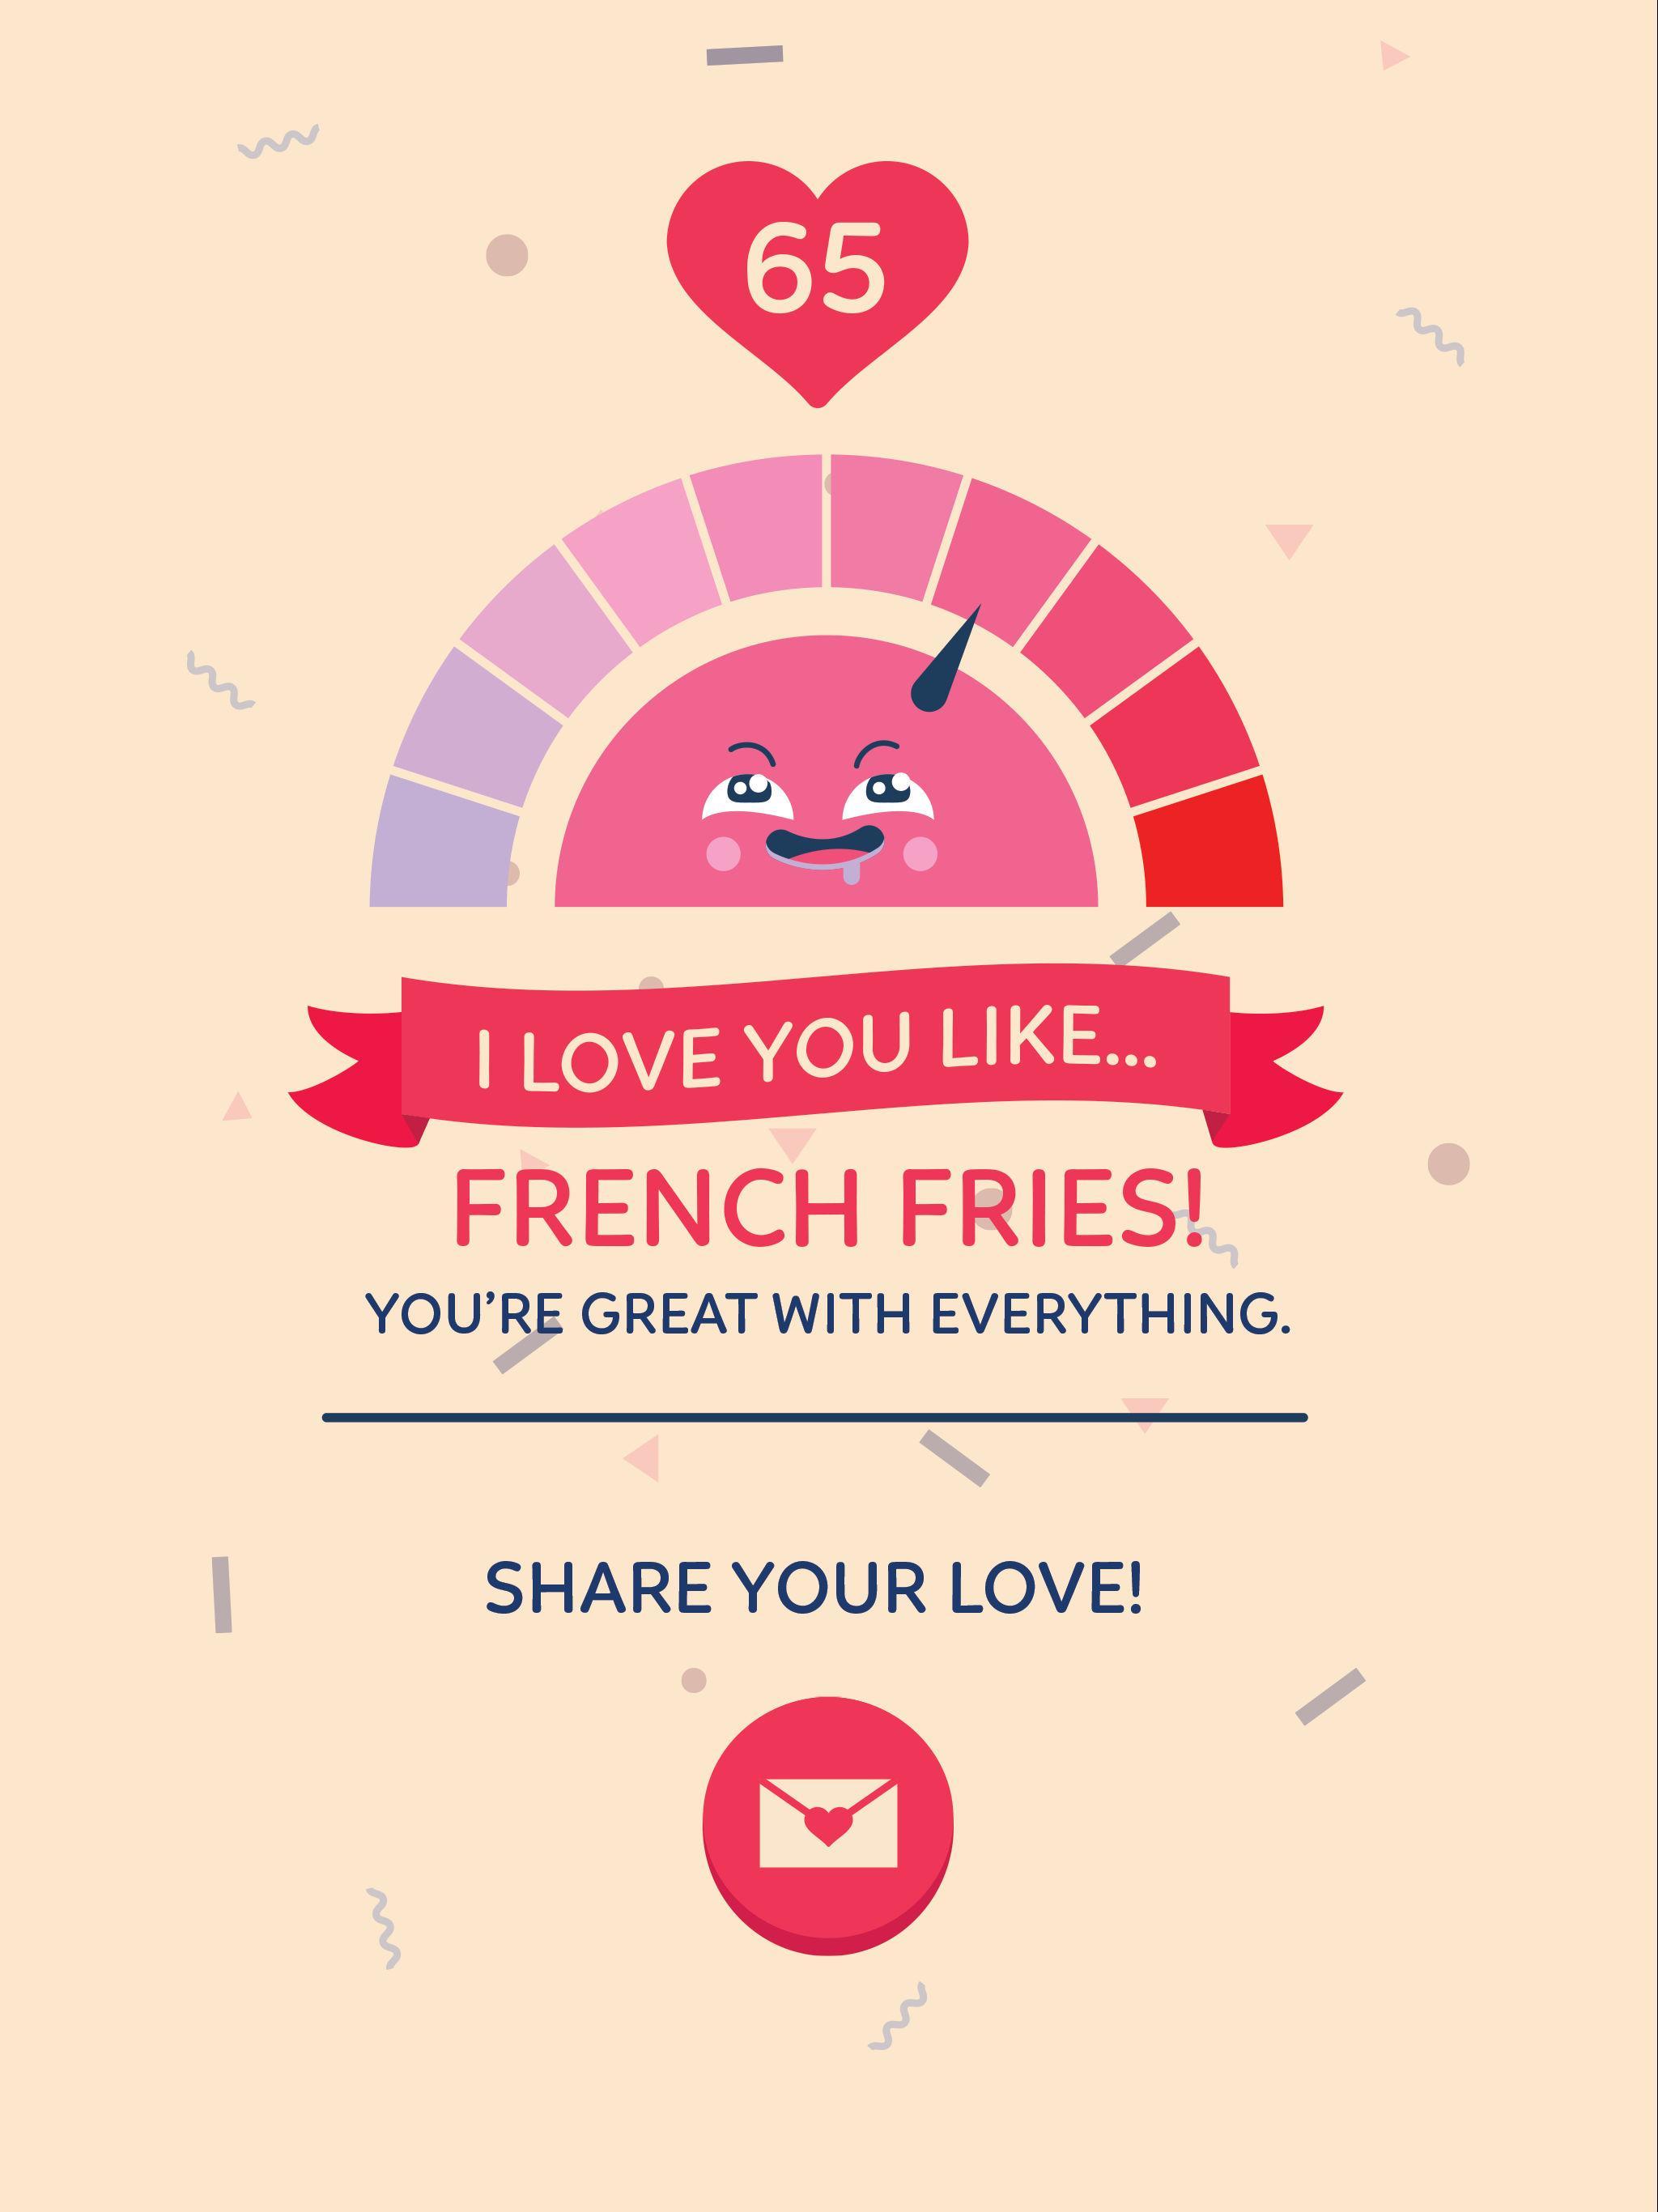 Heartbreak: Valentine's Day screenshot game